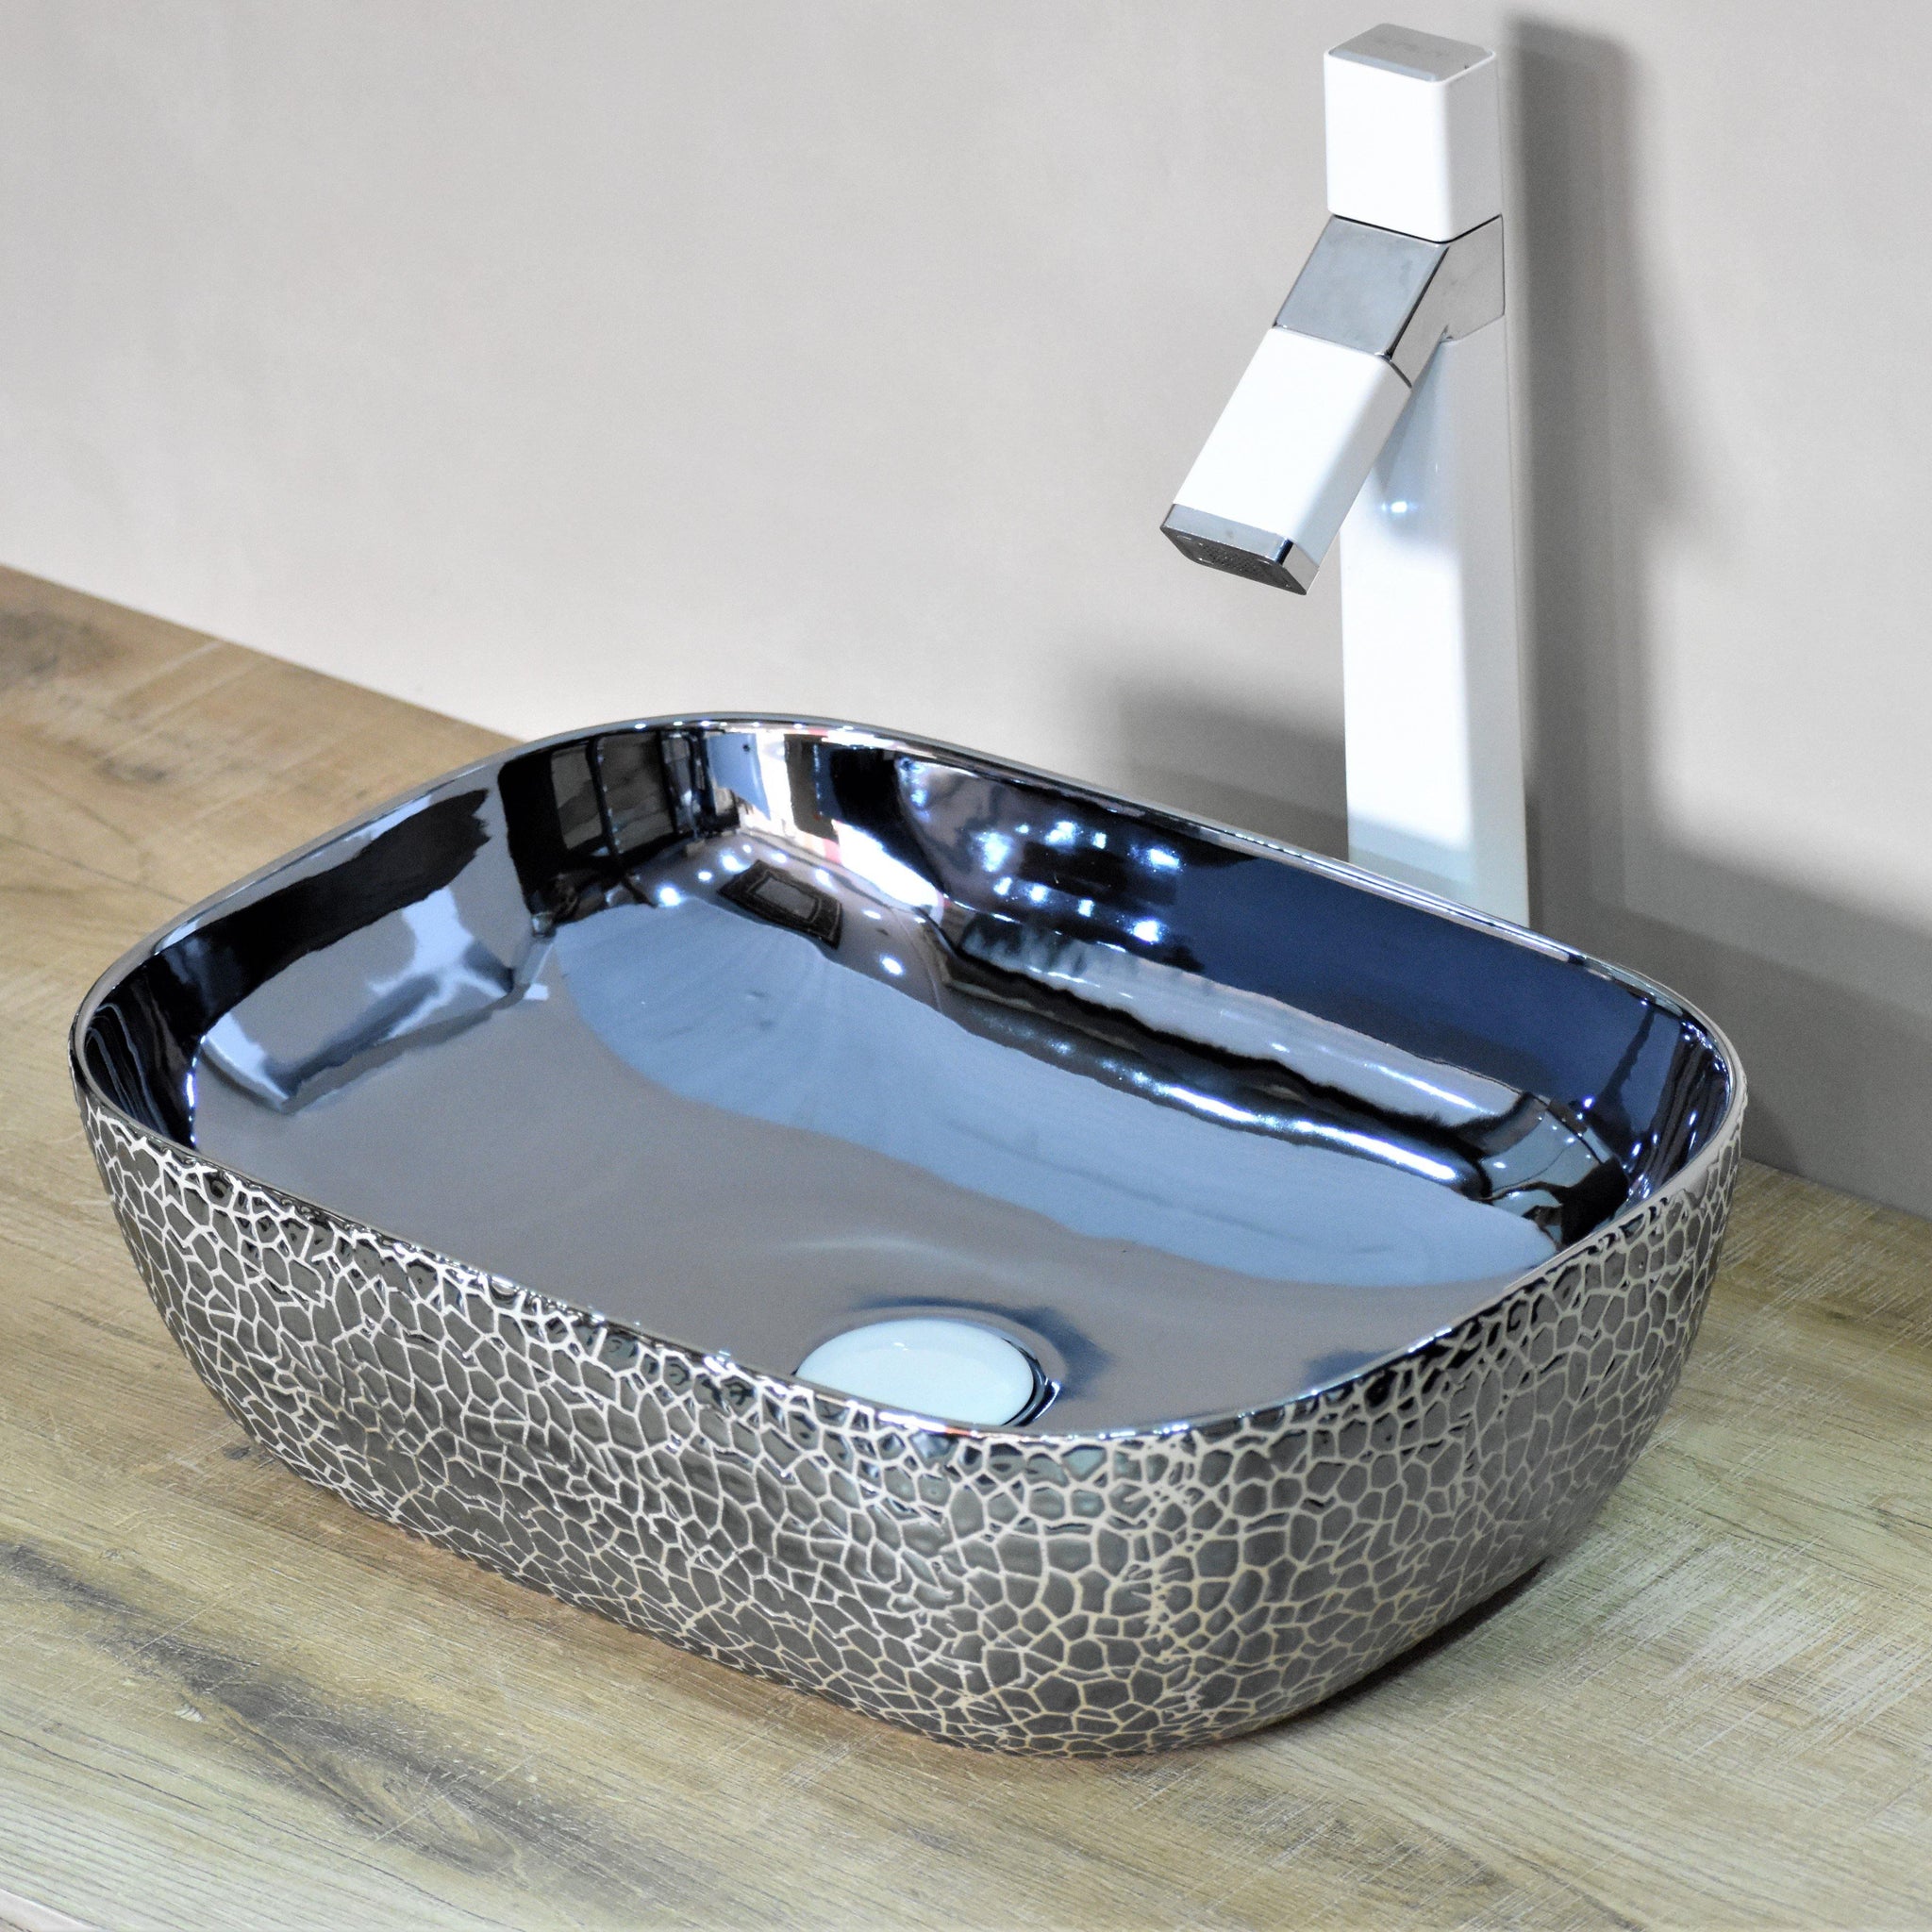 Ceramic Designer Rectangular Table Top Vessel Sink for Bathroom & Living Room 18 X 13 X 5 Inch Blue Glossy - Bath Outlet